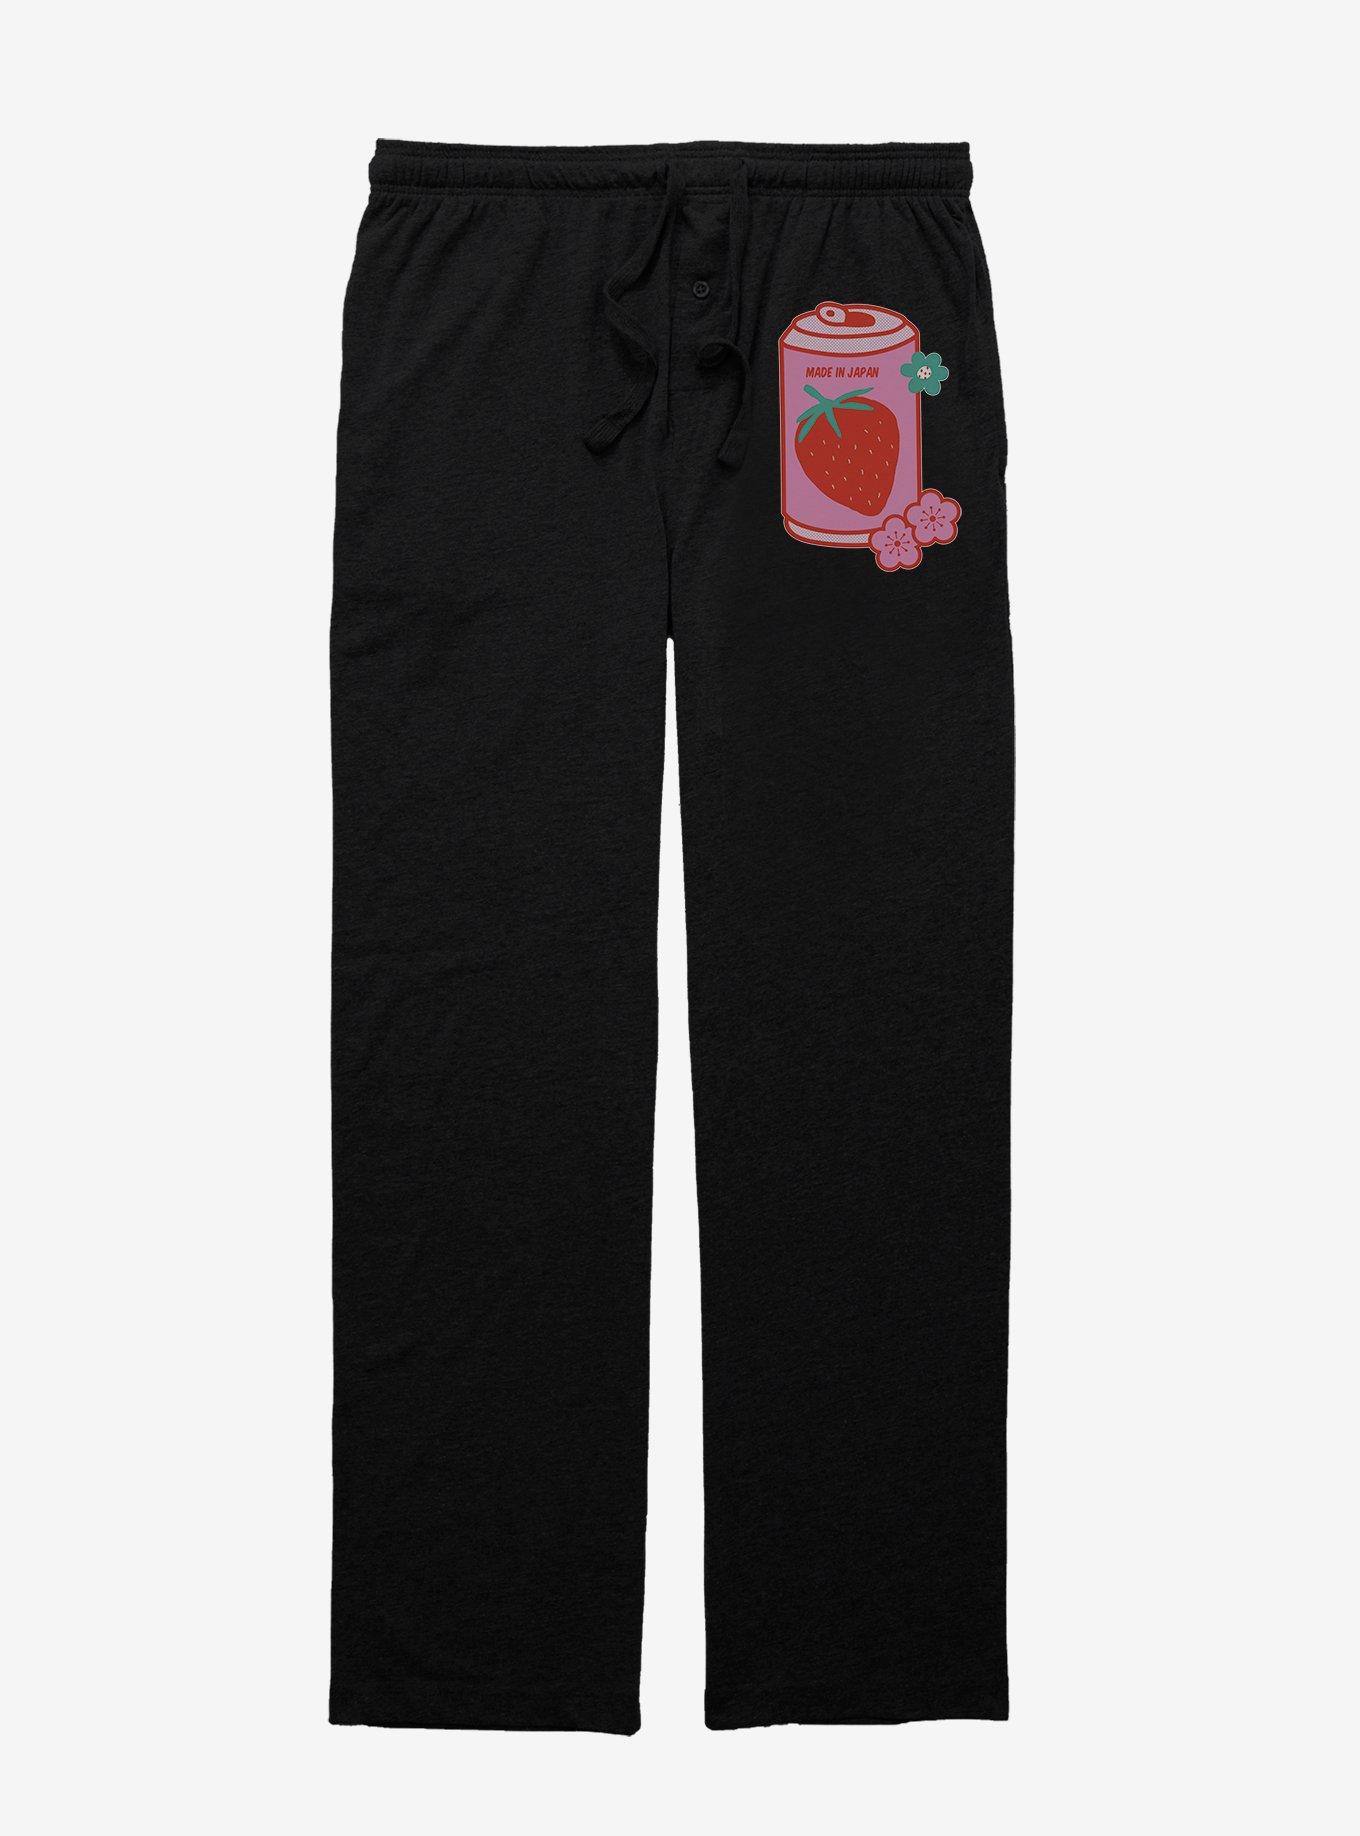 Strawberry Milk Soda Pop Pajama Pants